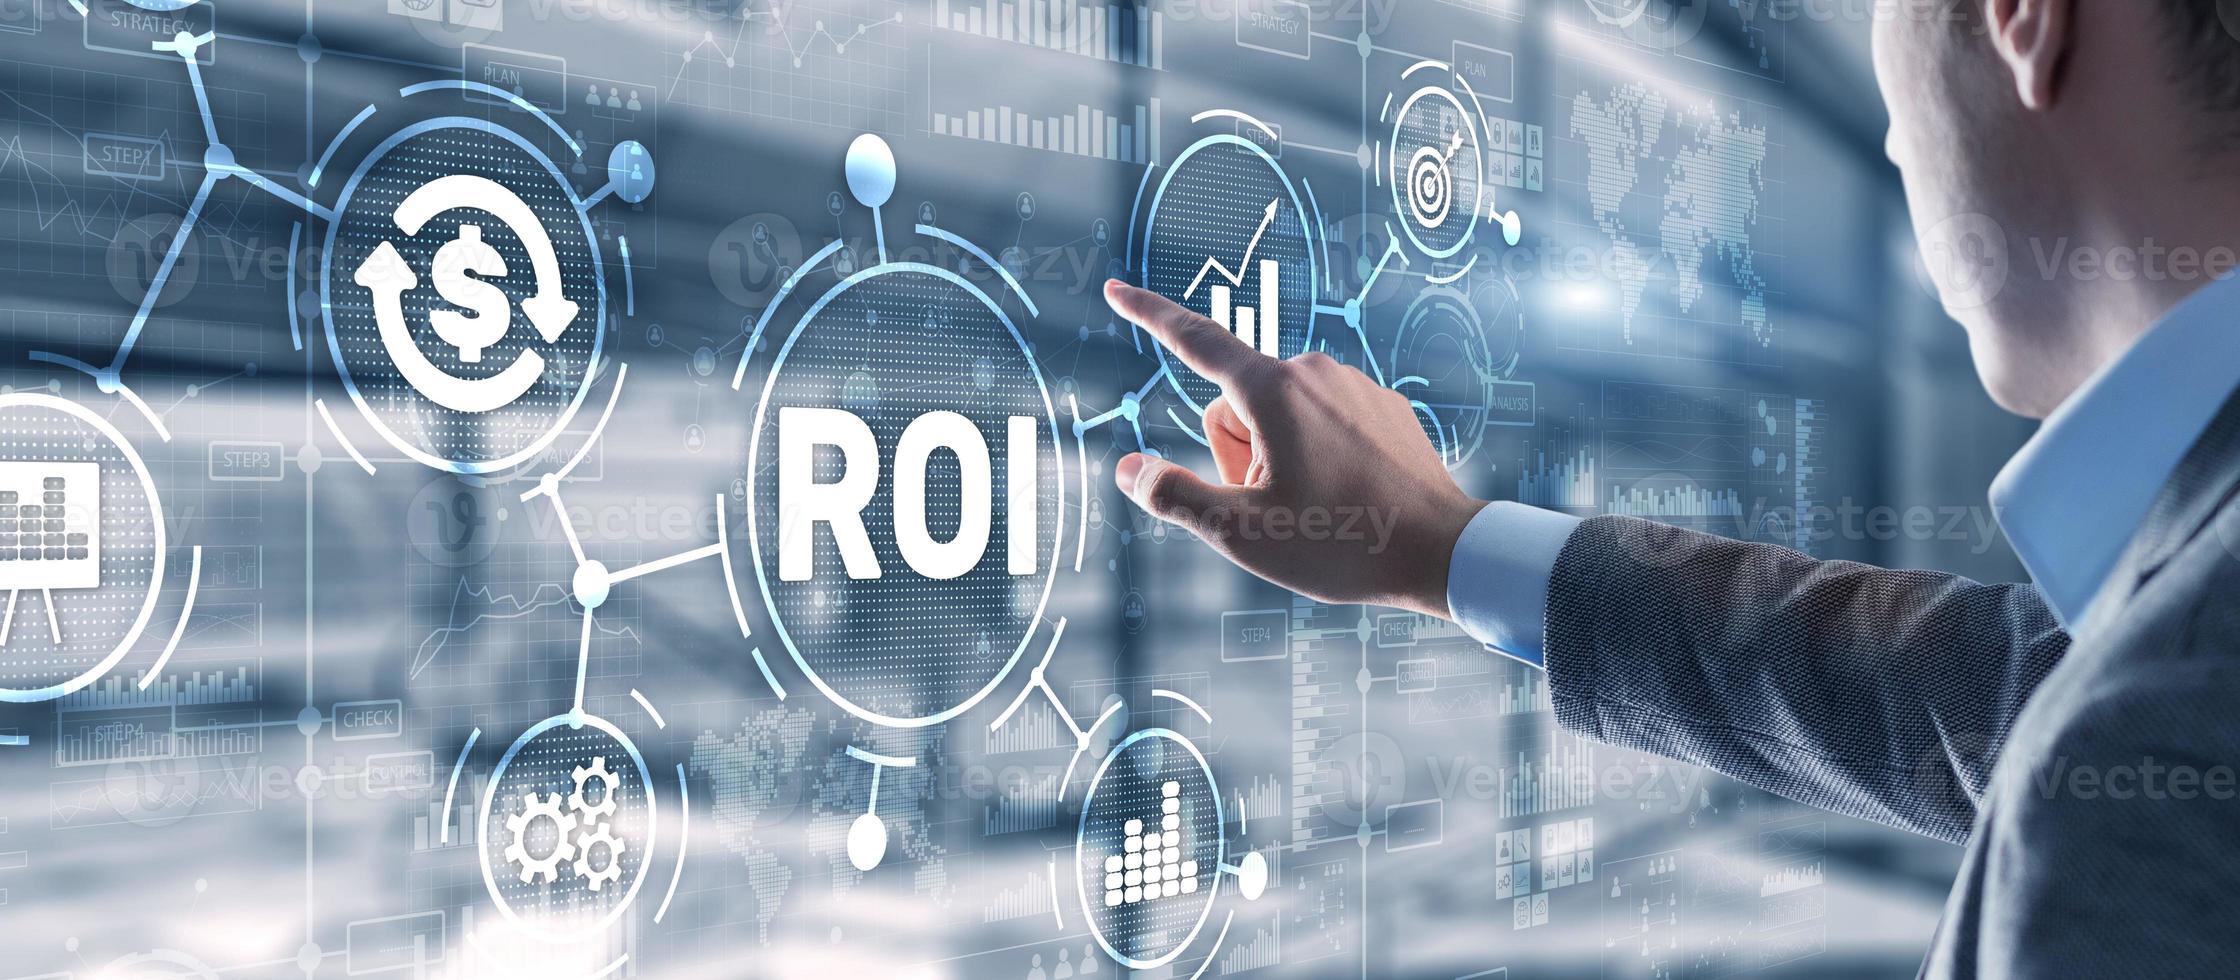 roi rendement op investering bedrijfstechnologie analyse financiën concept foto